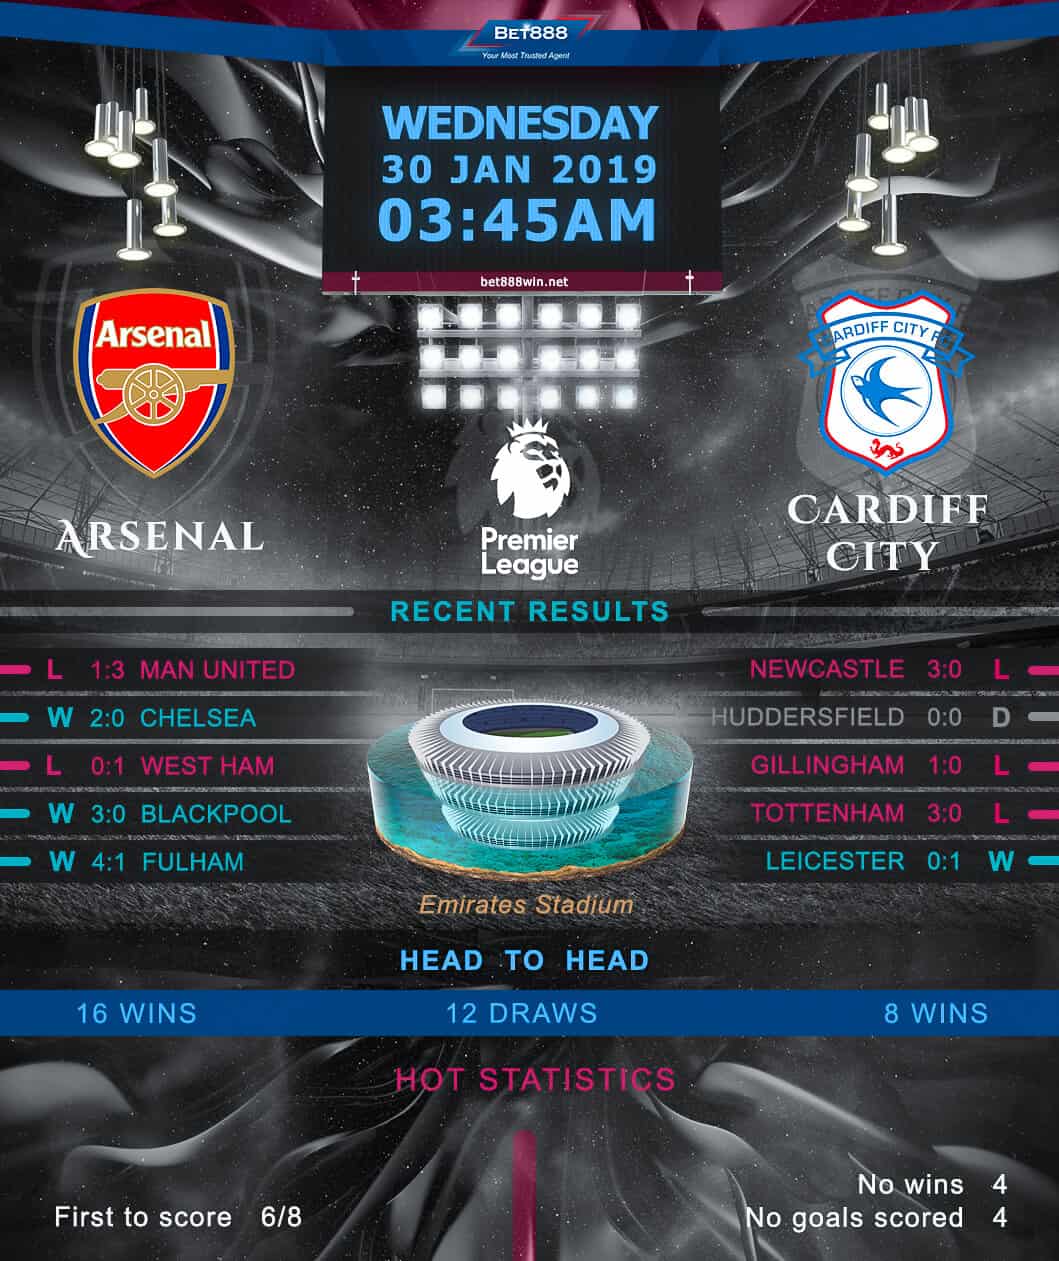 Arsenal vs Cardiff City﻿ 30/01/19